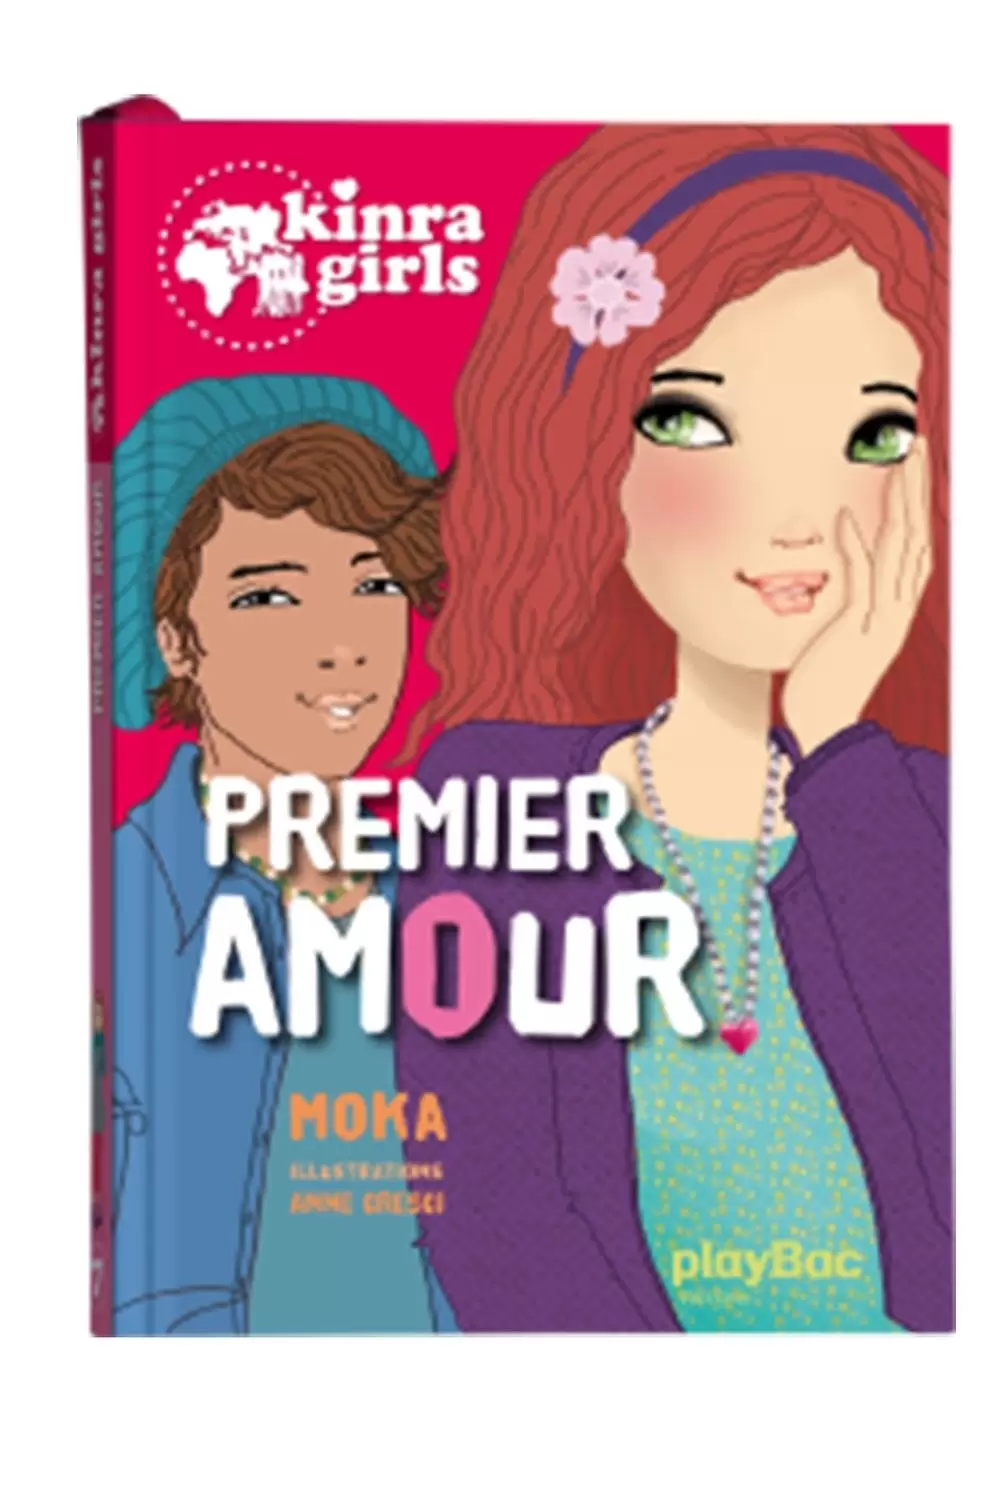 Kinra girls - Premier amour